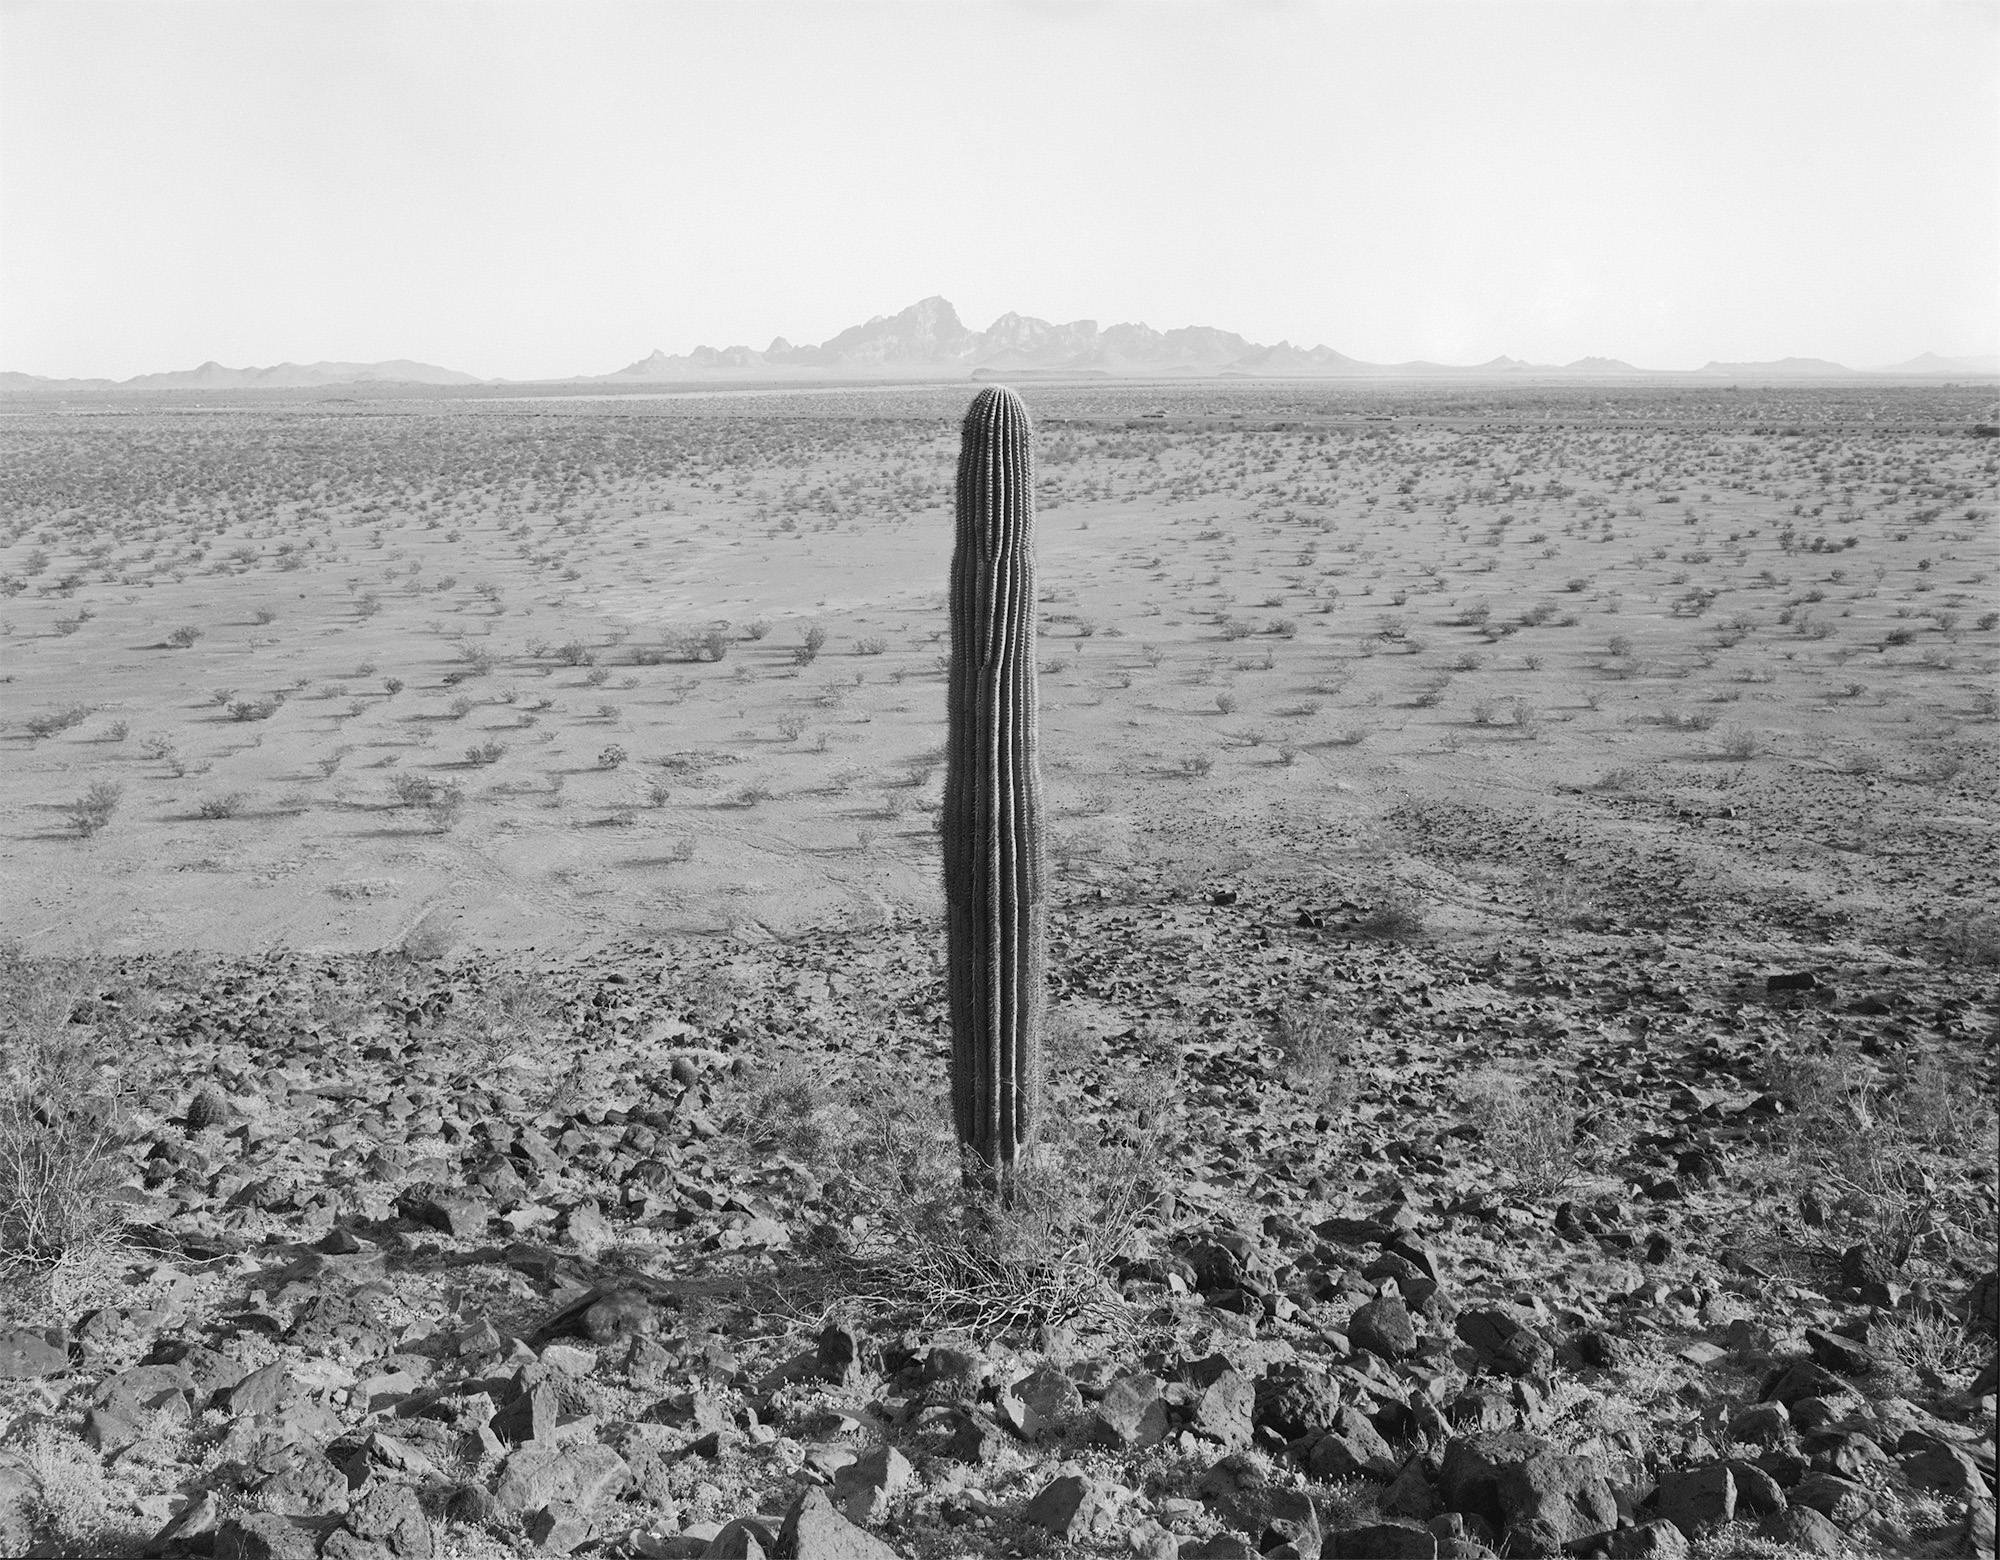 Cactus, Arizona, USA, 1977